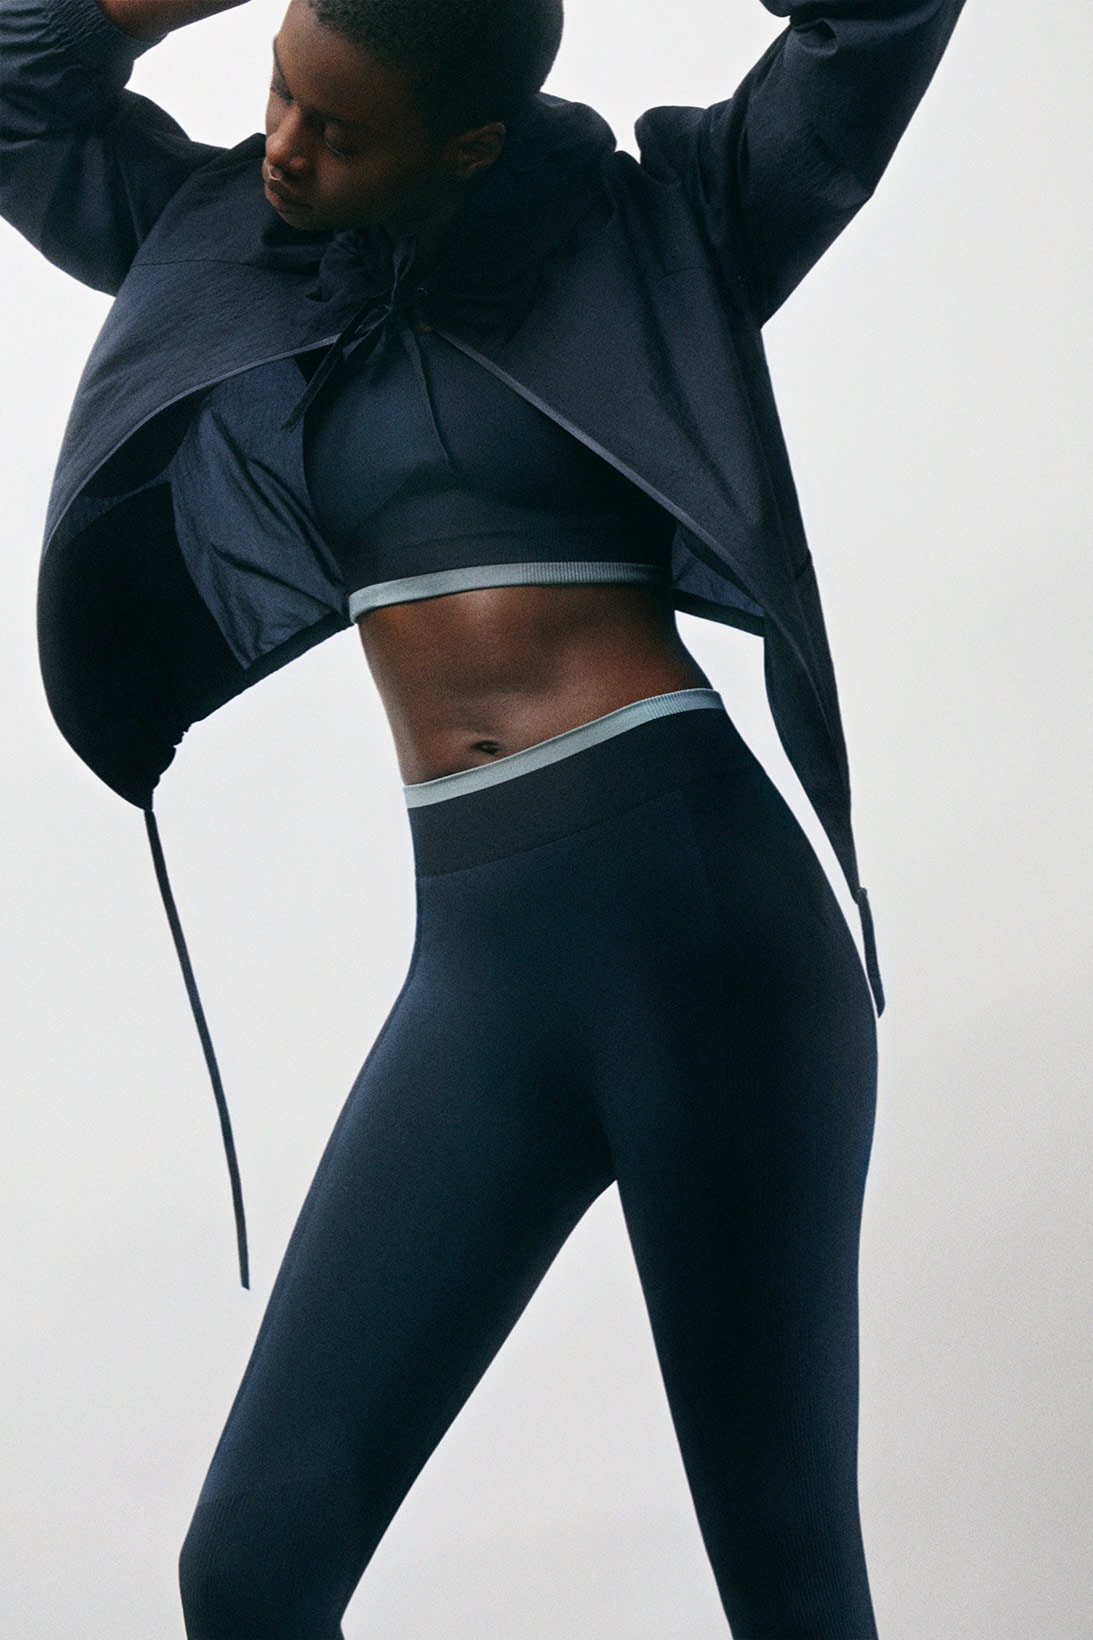 cos activewear collection drop 2 womens jacket sports bra leggings black